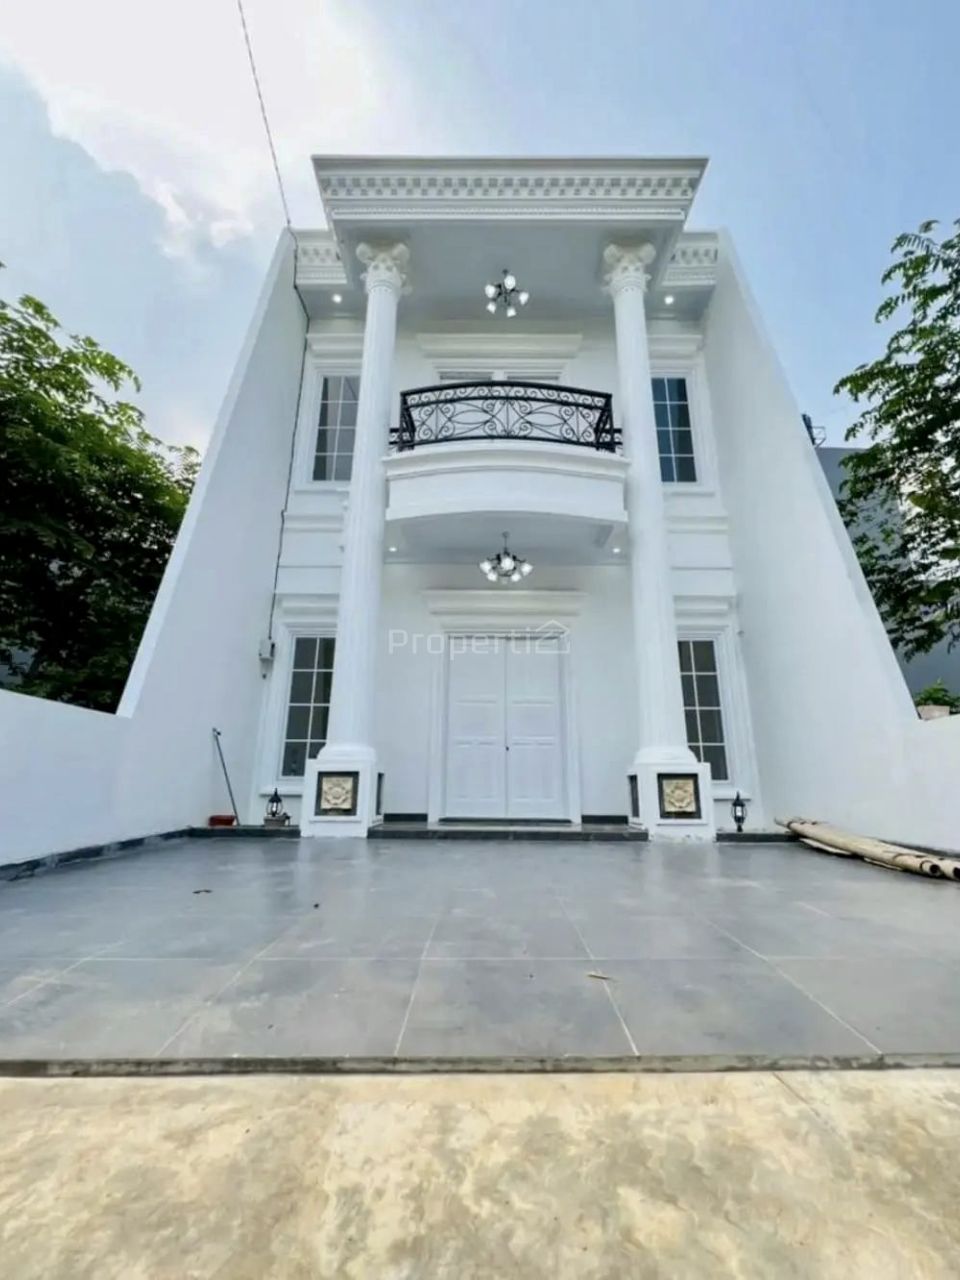 New House in Ciganjur, South Jakarta, DKI Jakarta